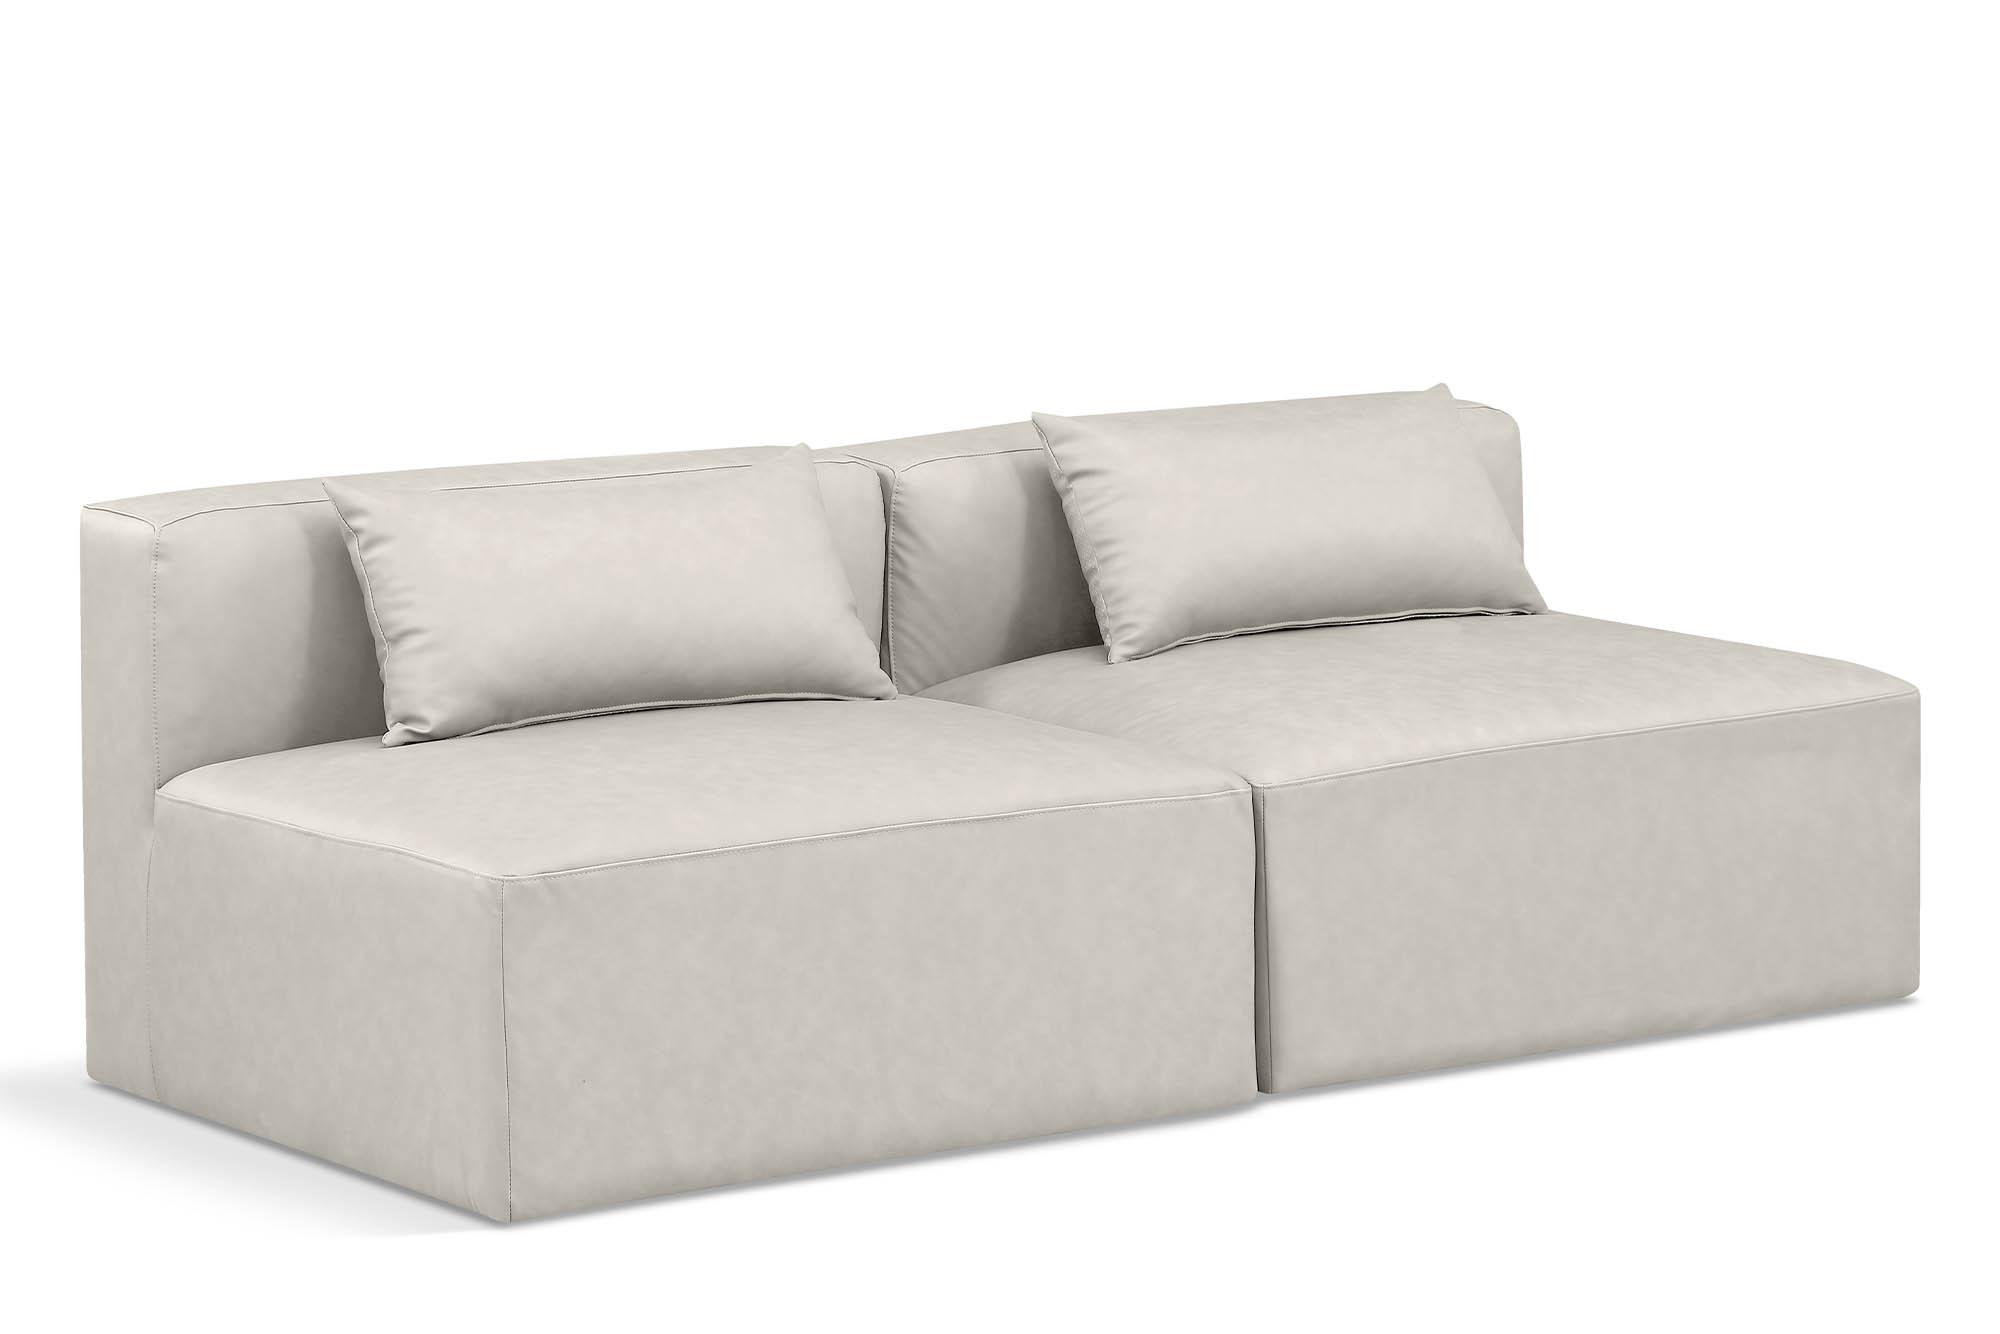 Contemporary, Modern Modular Sofa CUBE 668Cream-S72A 668Cream-S72A in Cream Faux Leather